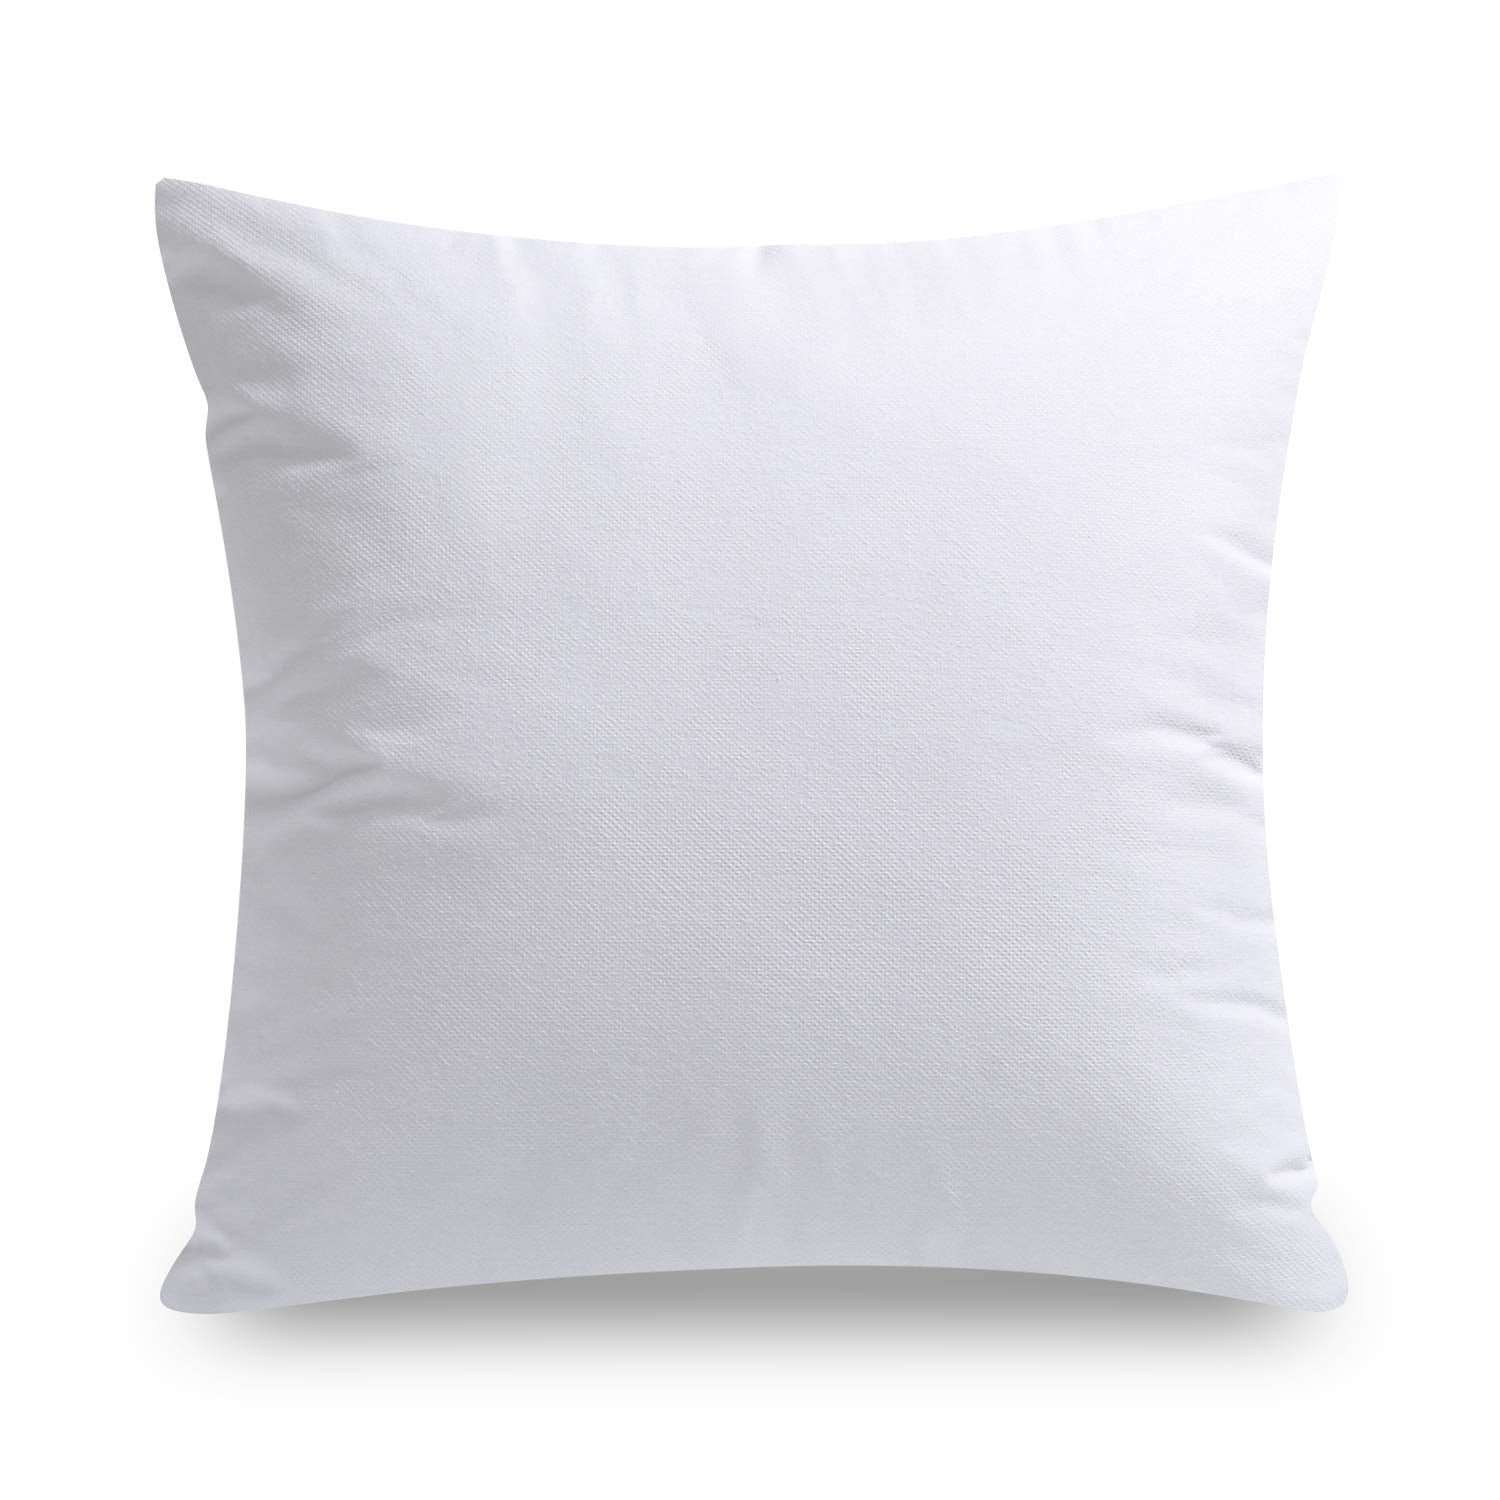 Eurotex Microfibre Pillow Insert (18x18, PK-2 ) - Polyester Filled